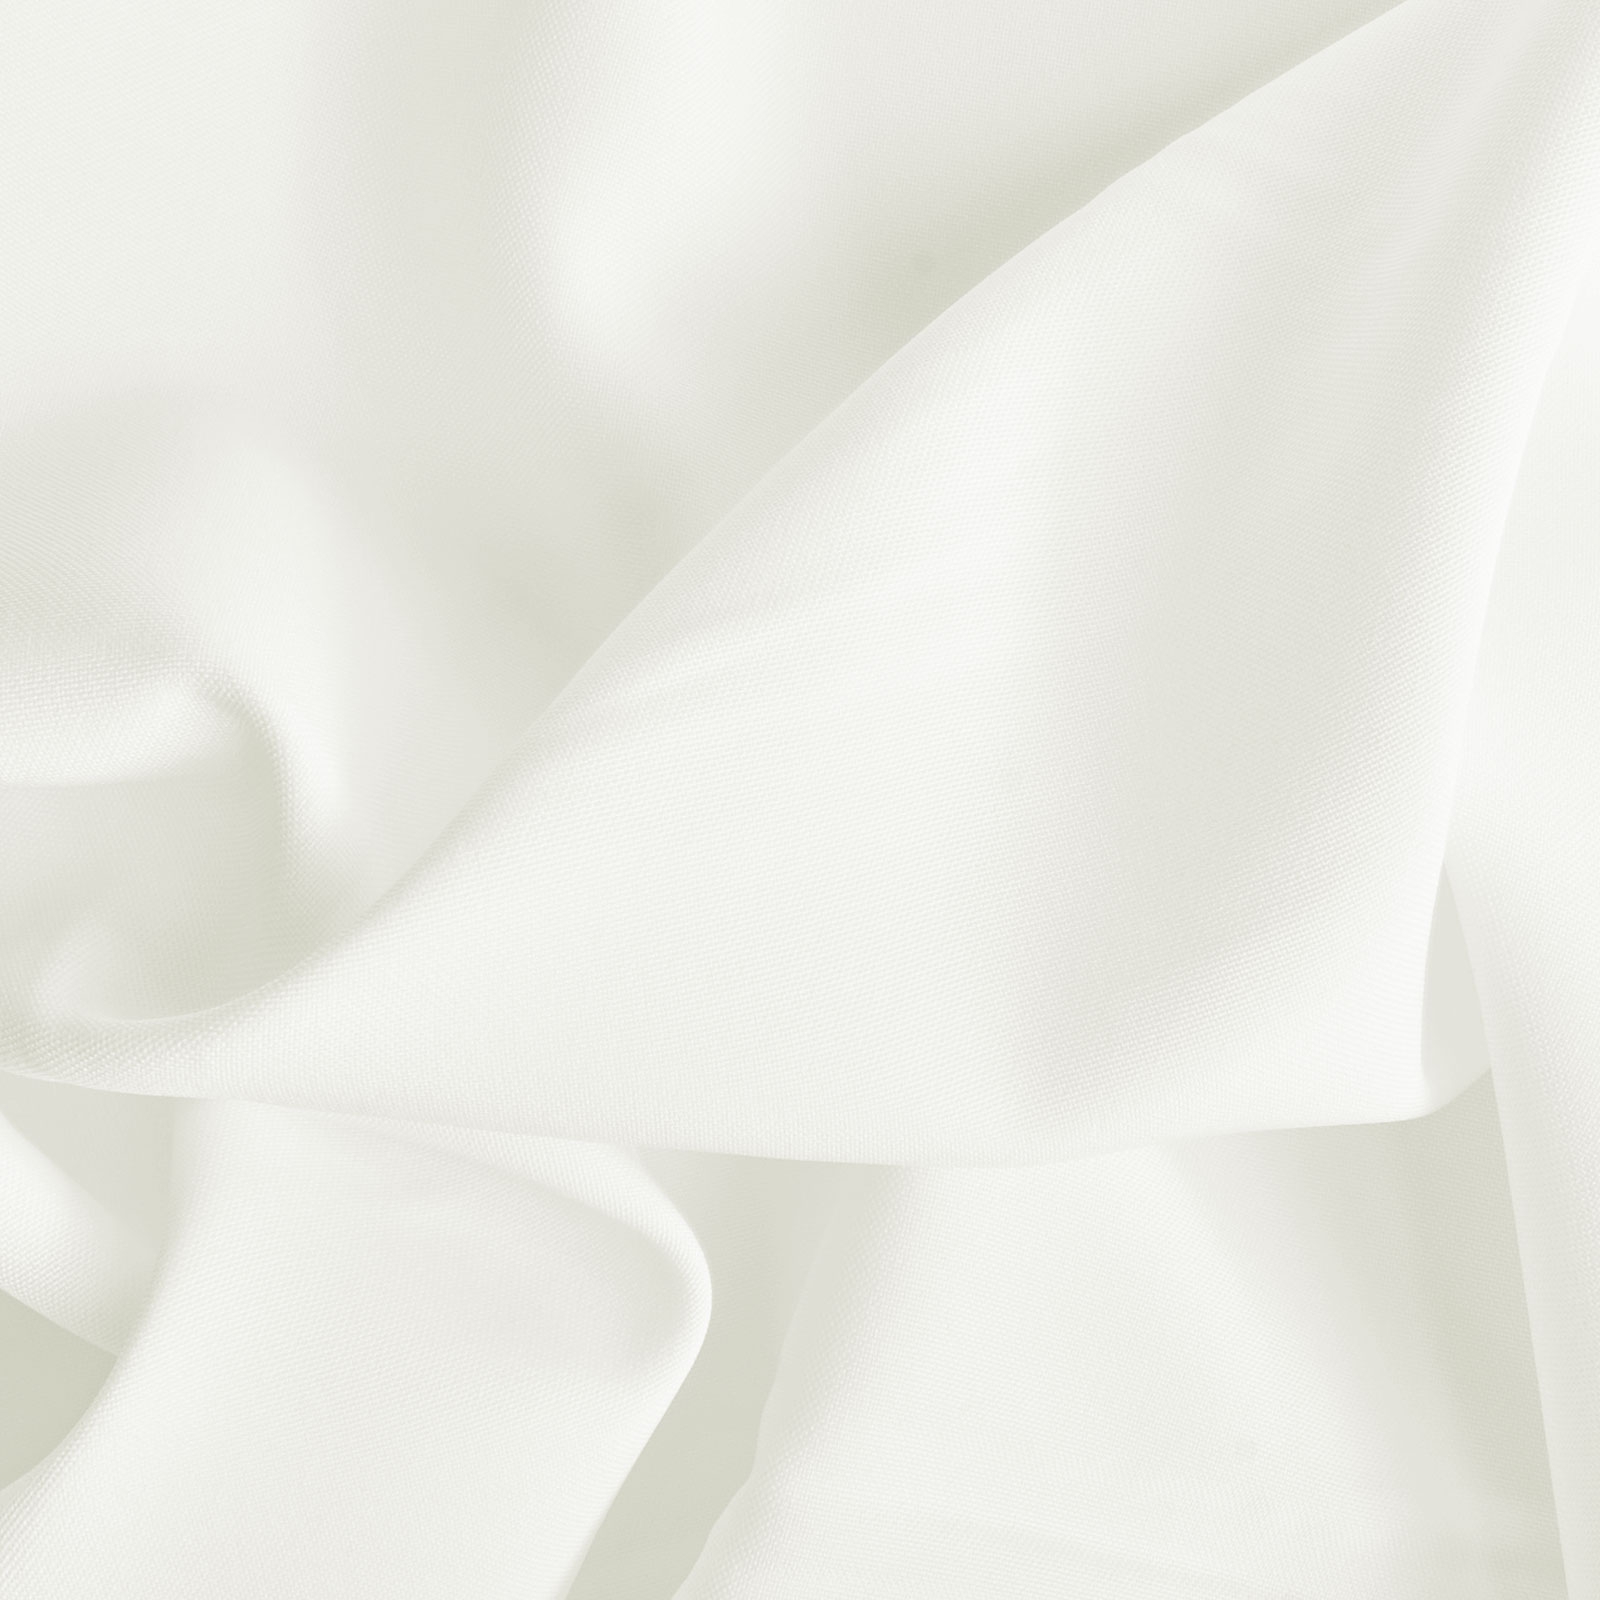 Permanento - tissu décoratif polyvalent - permanent ignifugé B1 - Blanc